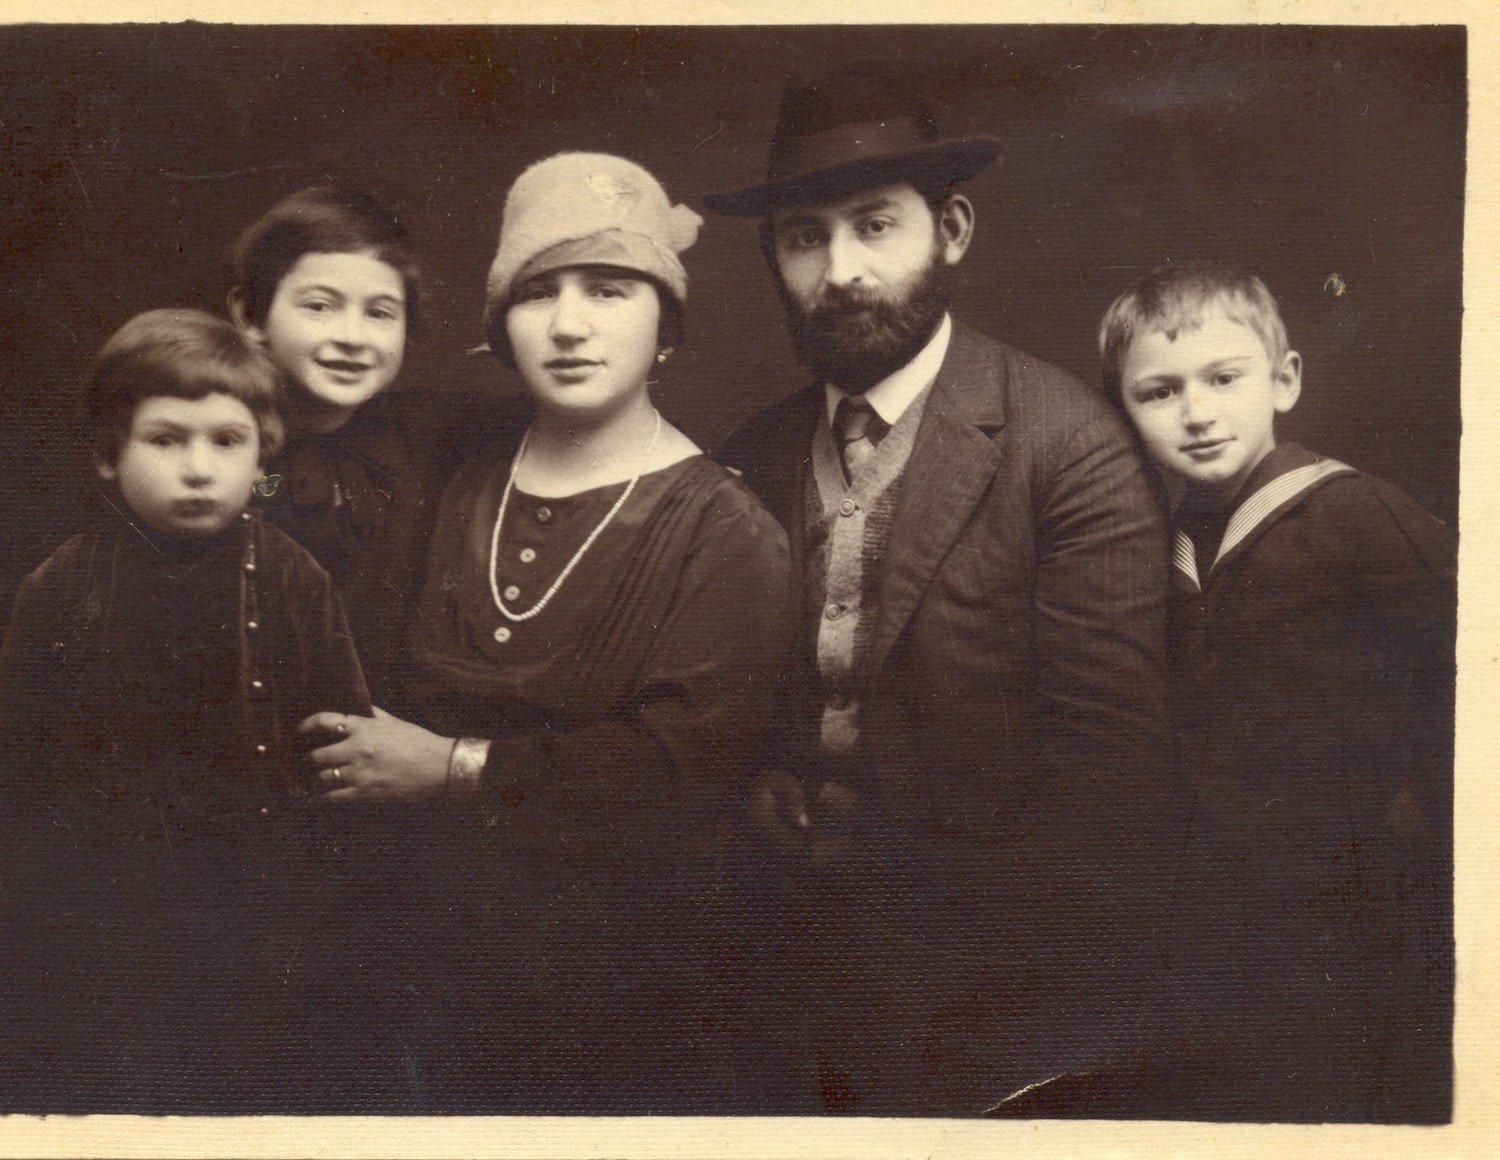 The Bruckstein Family in 1925. Image: Freddy Bruckstein's family archive.